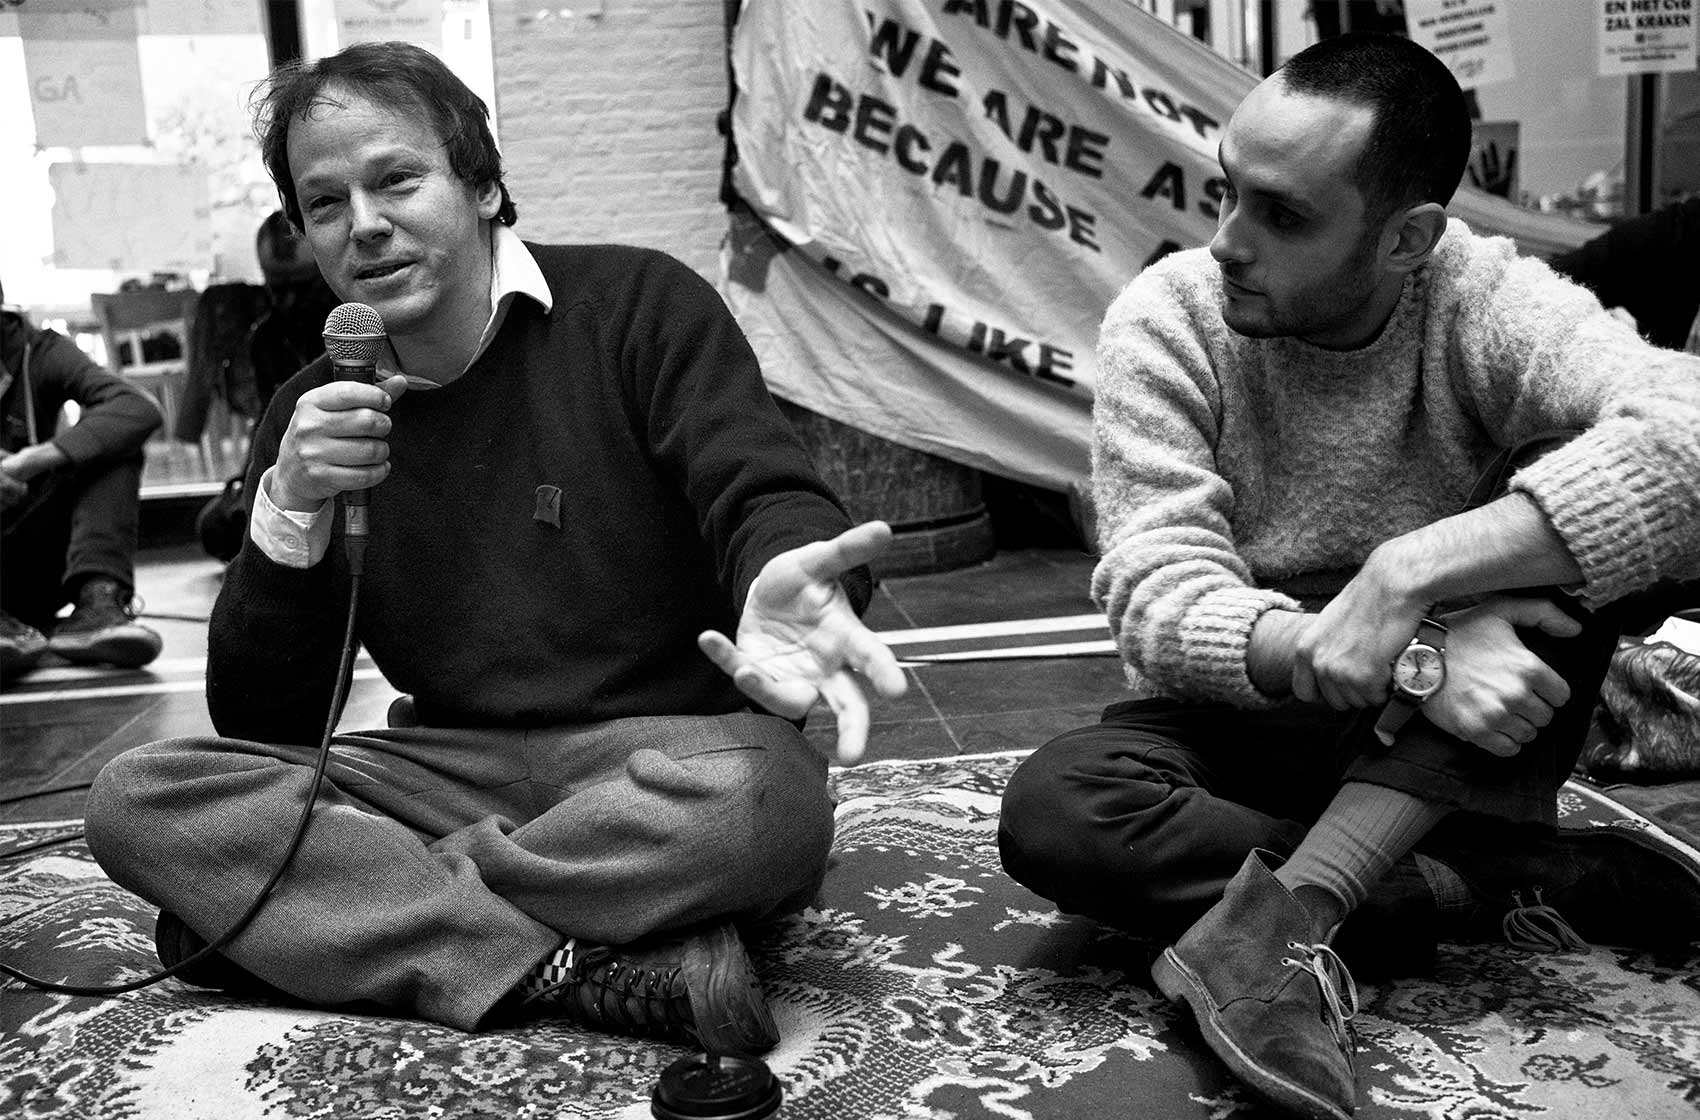 David Graeber à Occupy WallStreet